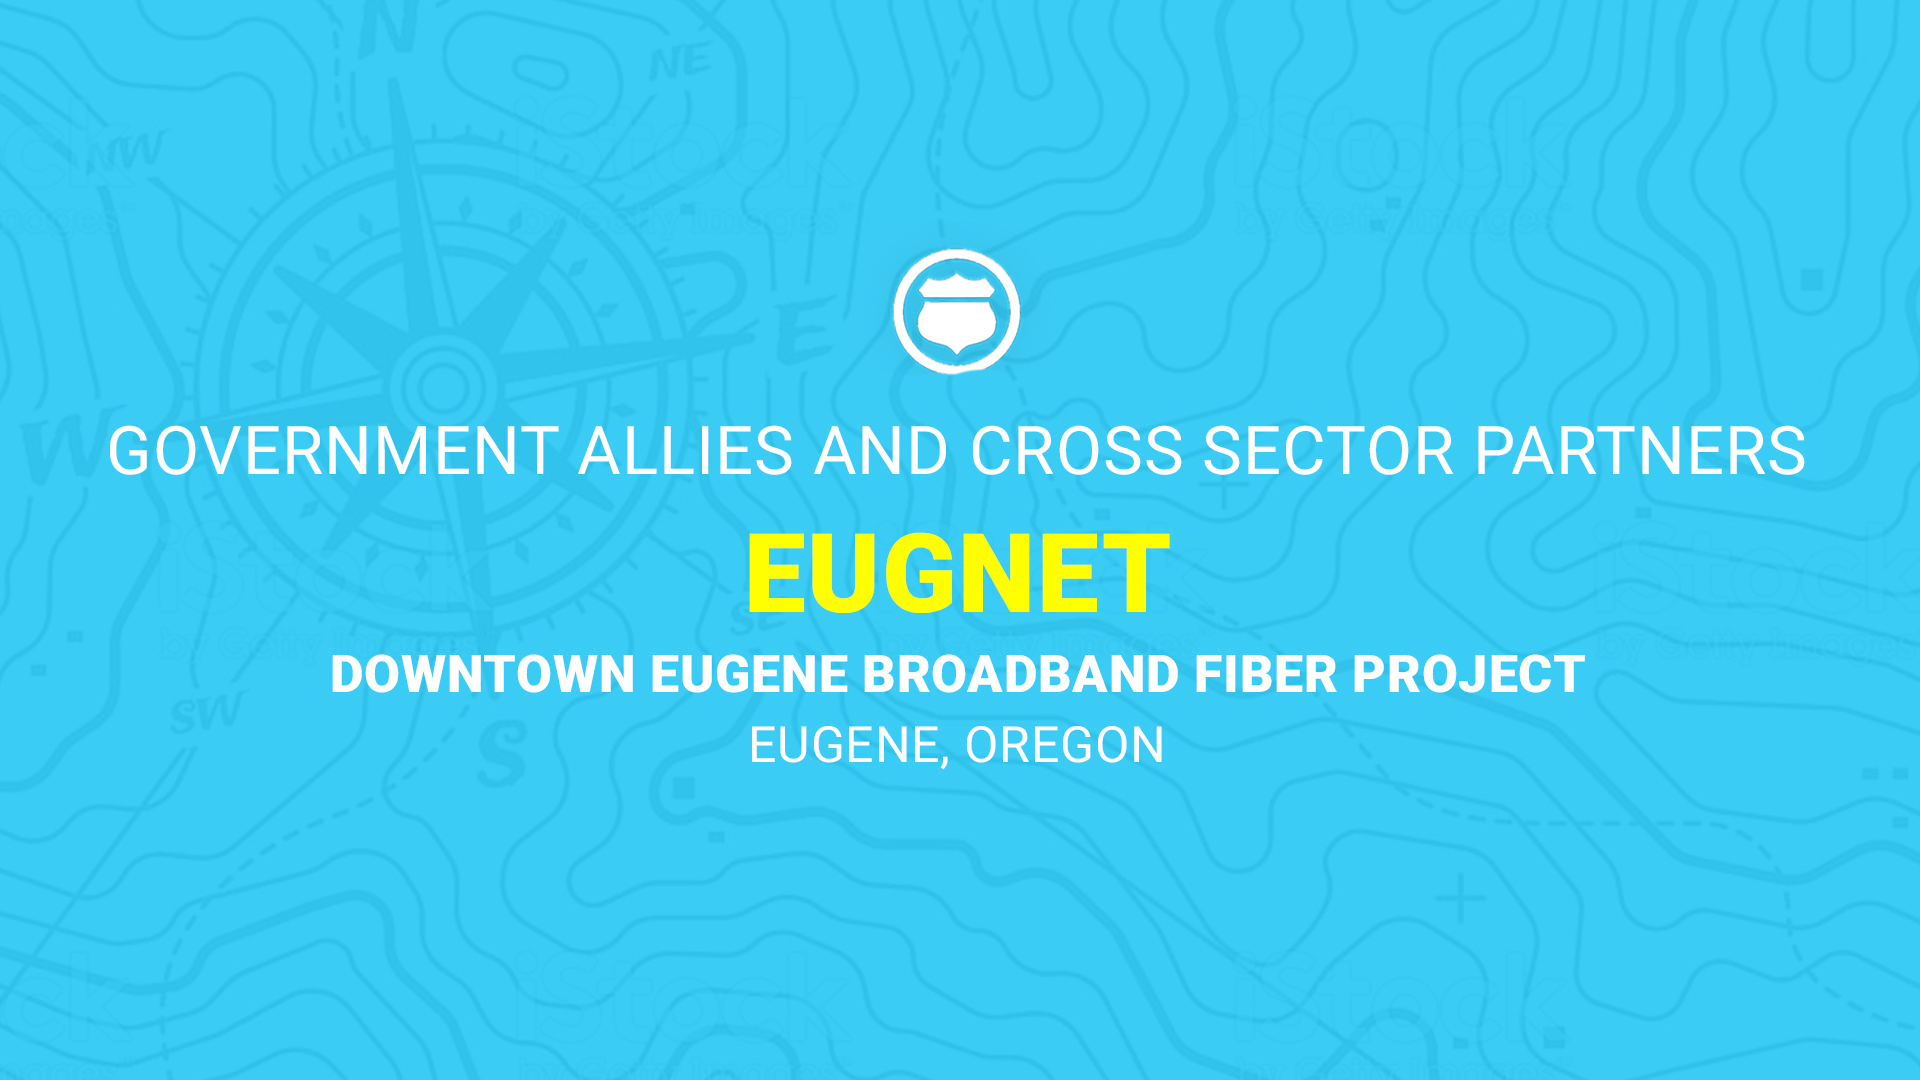 Finalists: Team from EUGNet, Downtown Eugene Broadband Fiber Project, Eugene, Oregon